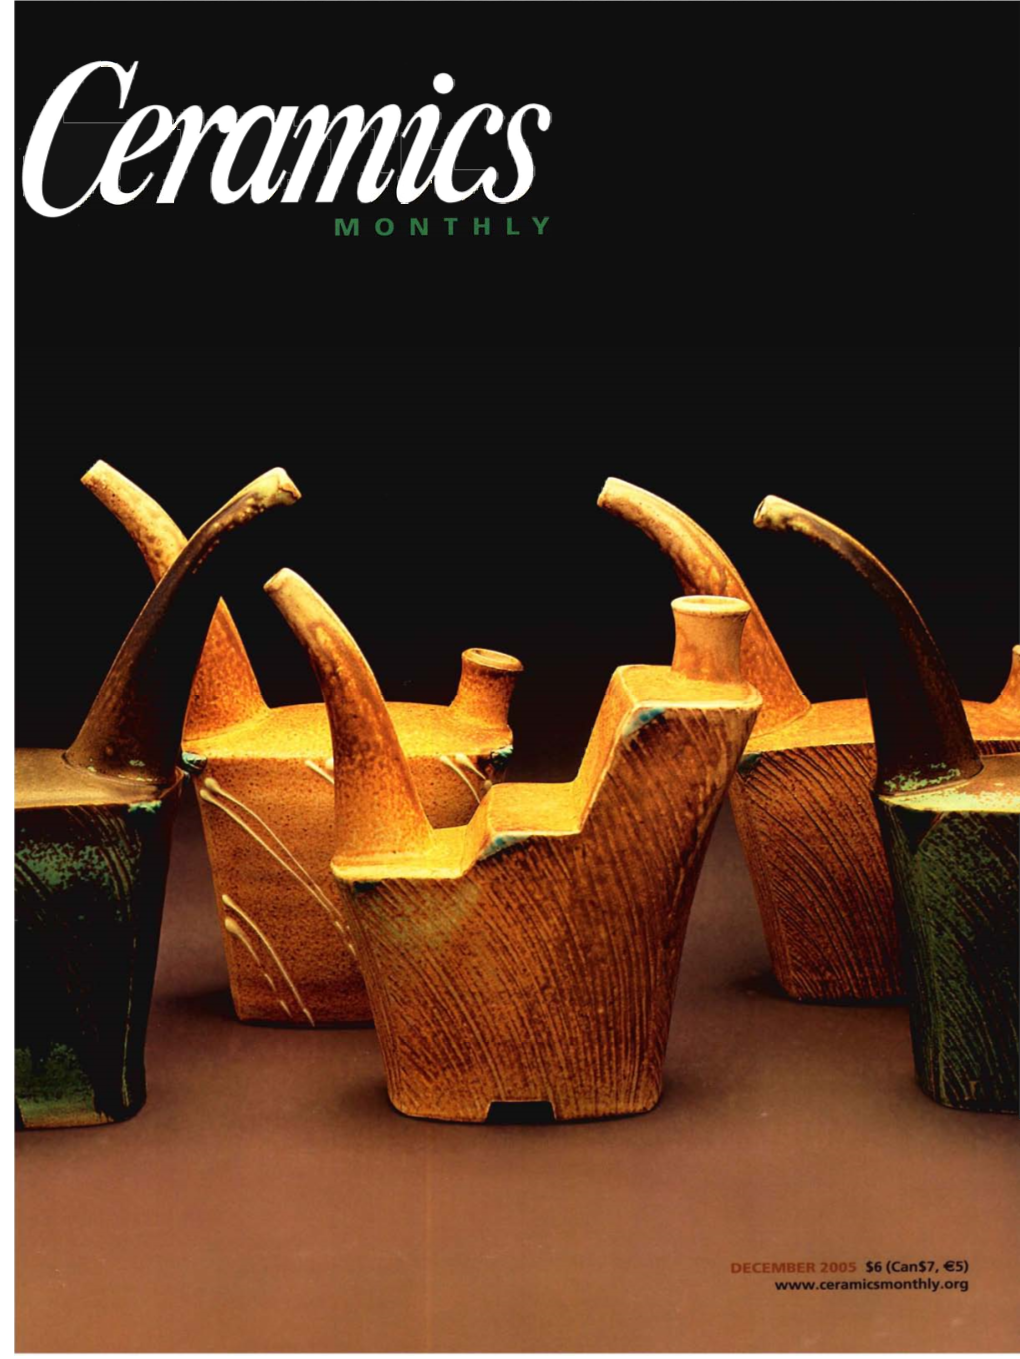 Ceramics Monthly Annual Index January-December 2005